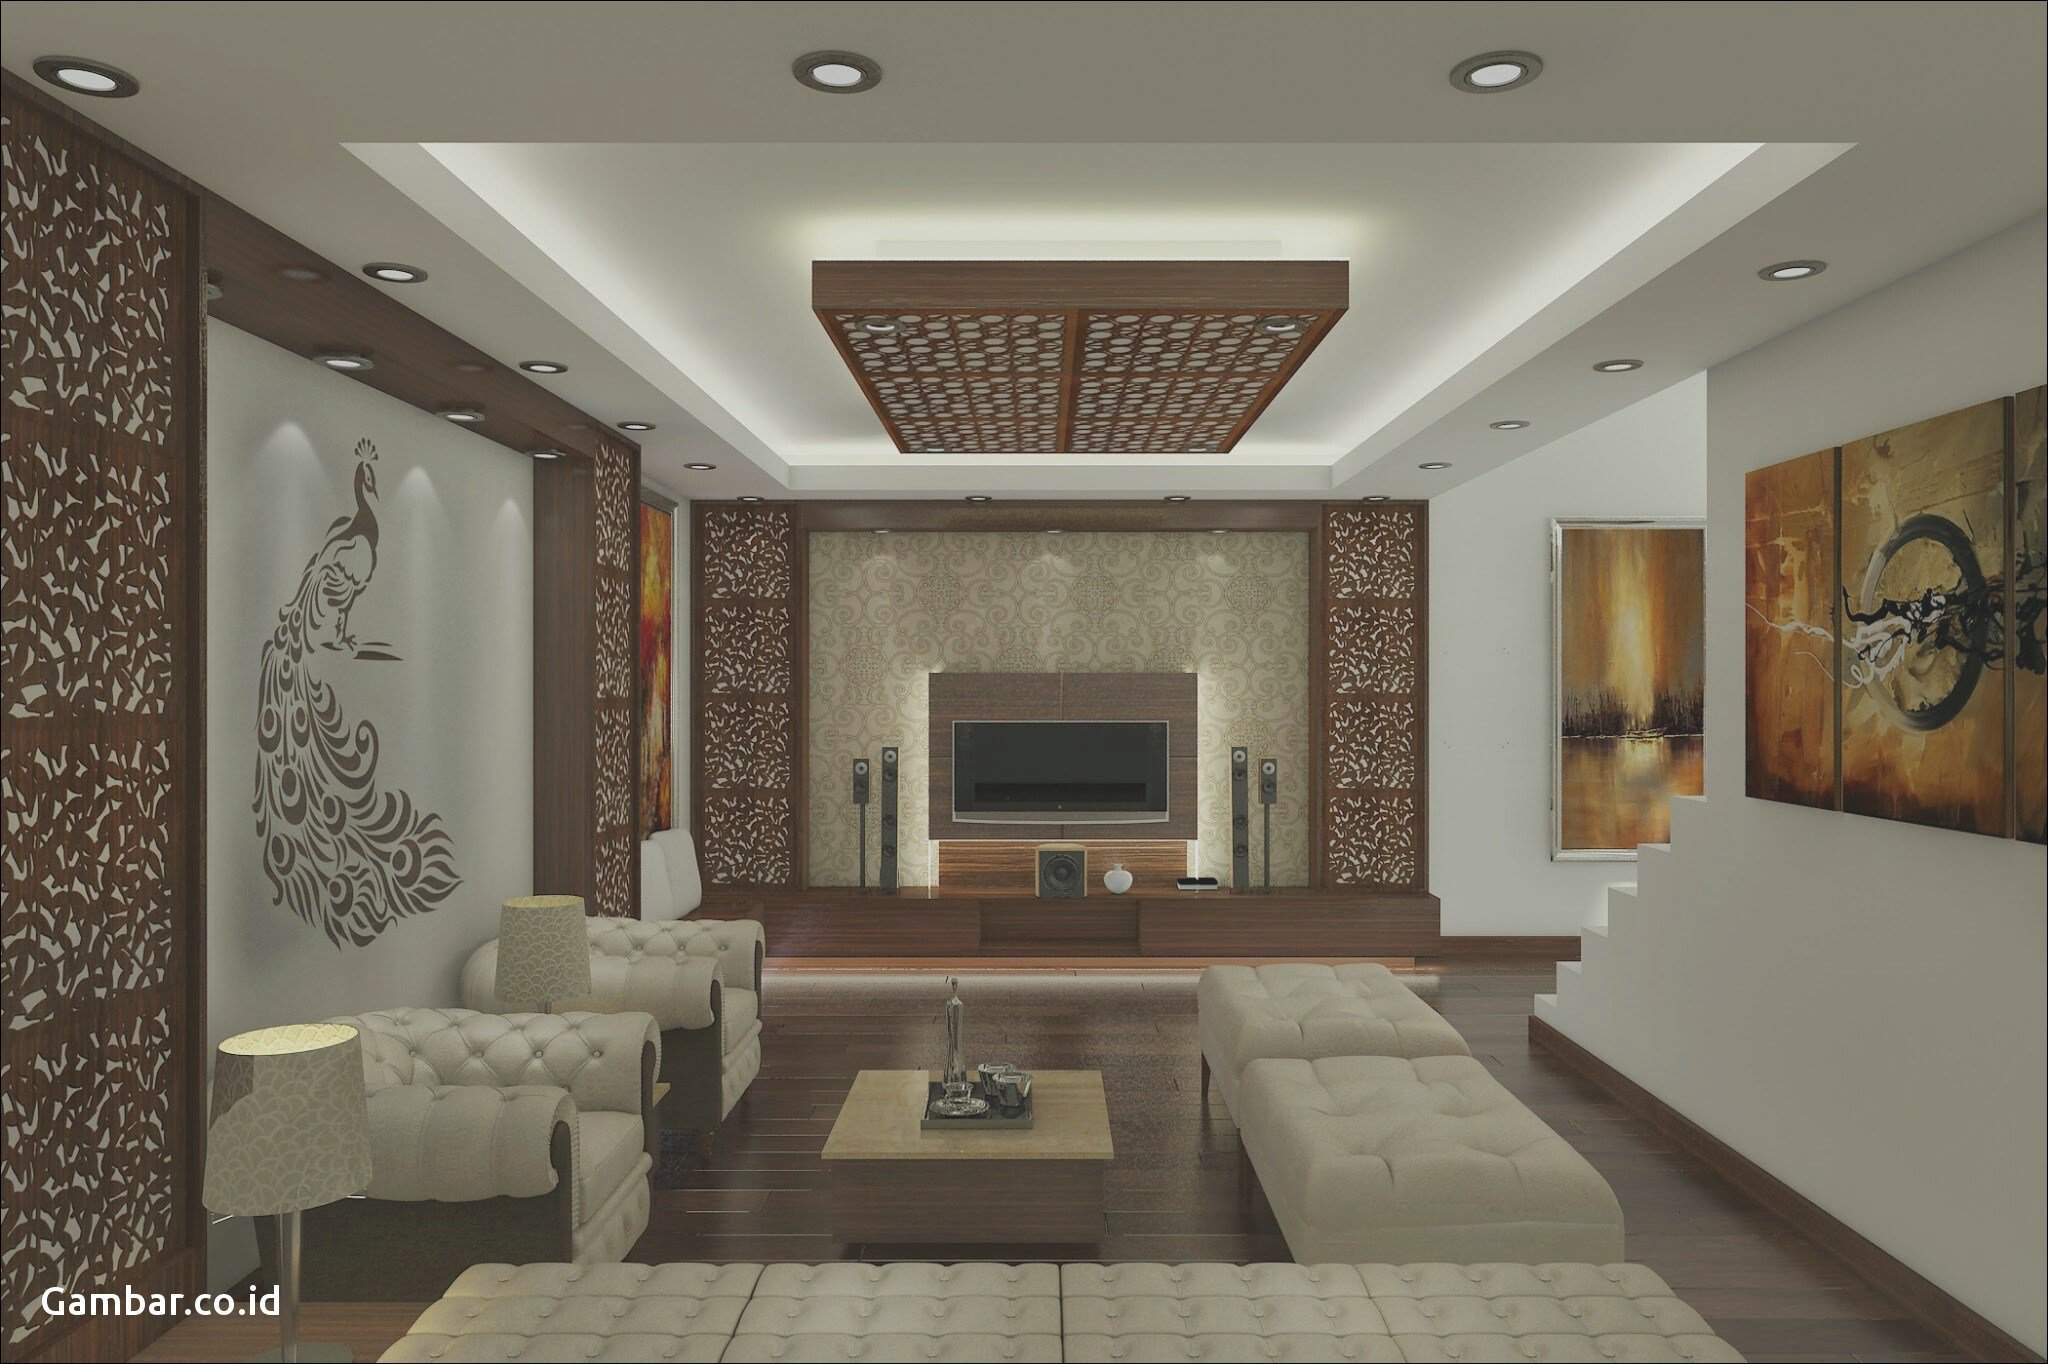 Living Room Drop Ceiling Design 2048x1364 Wallpaper Teahub Io